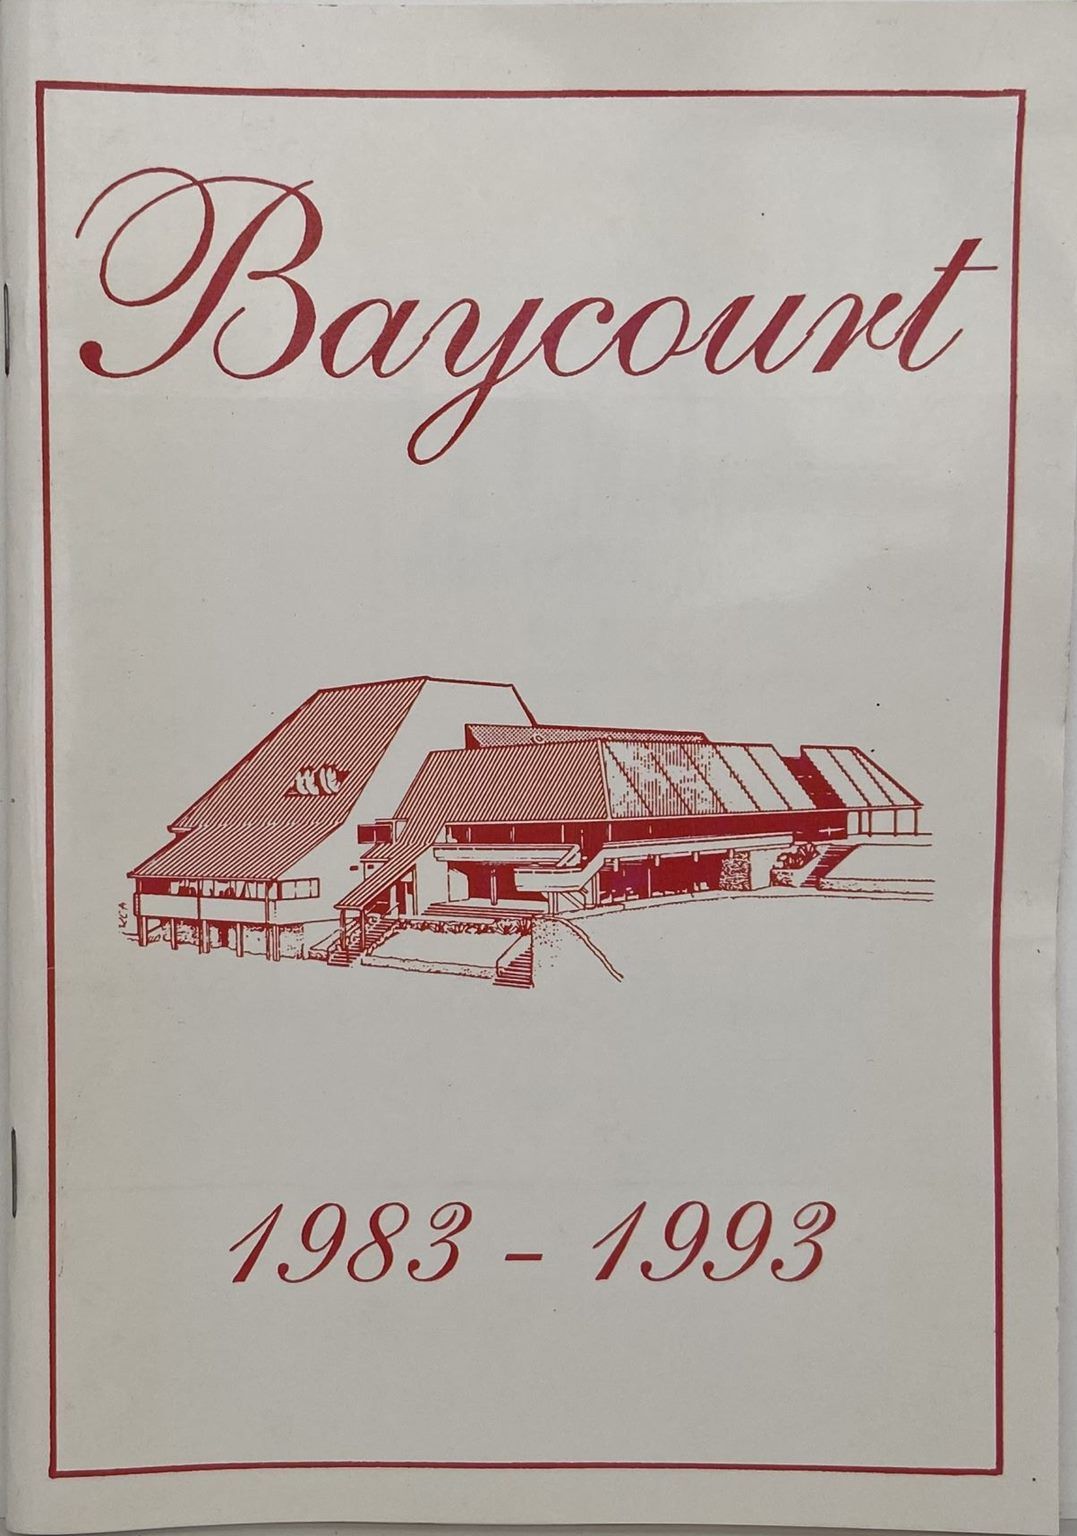 BAYCOURT 1983 - 1993